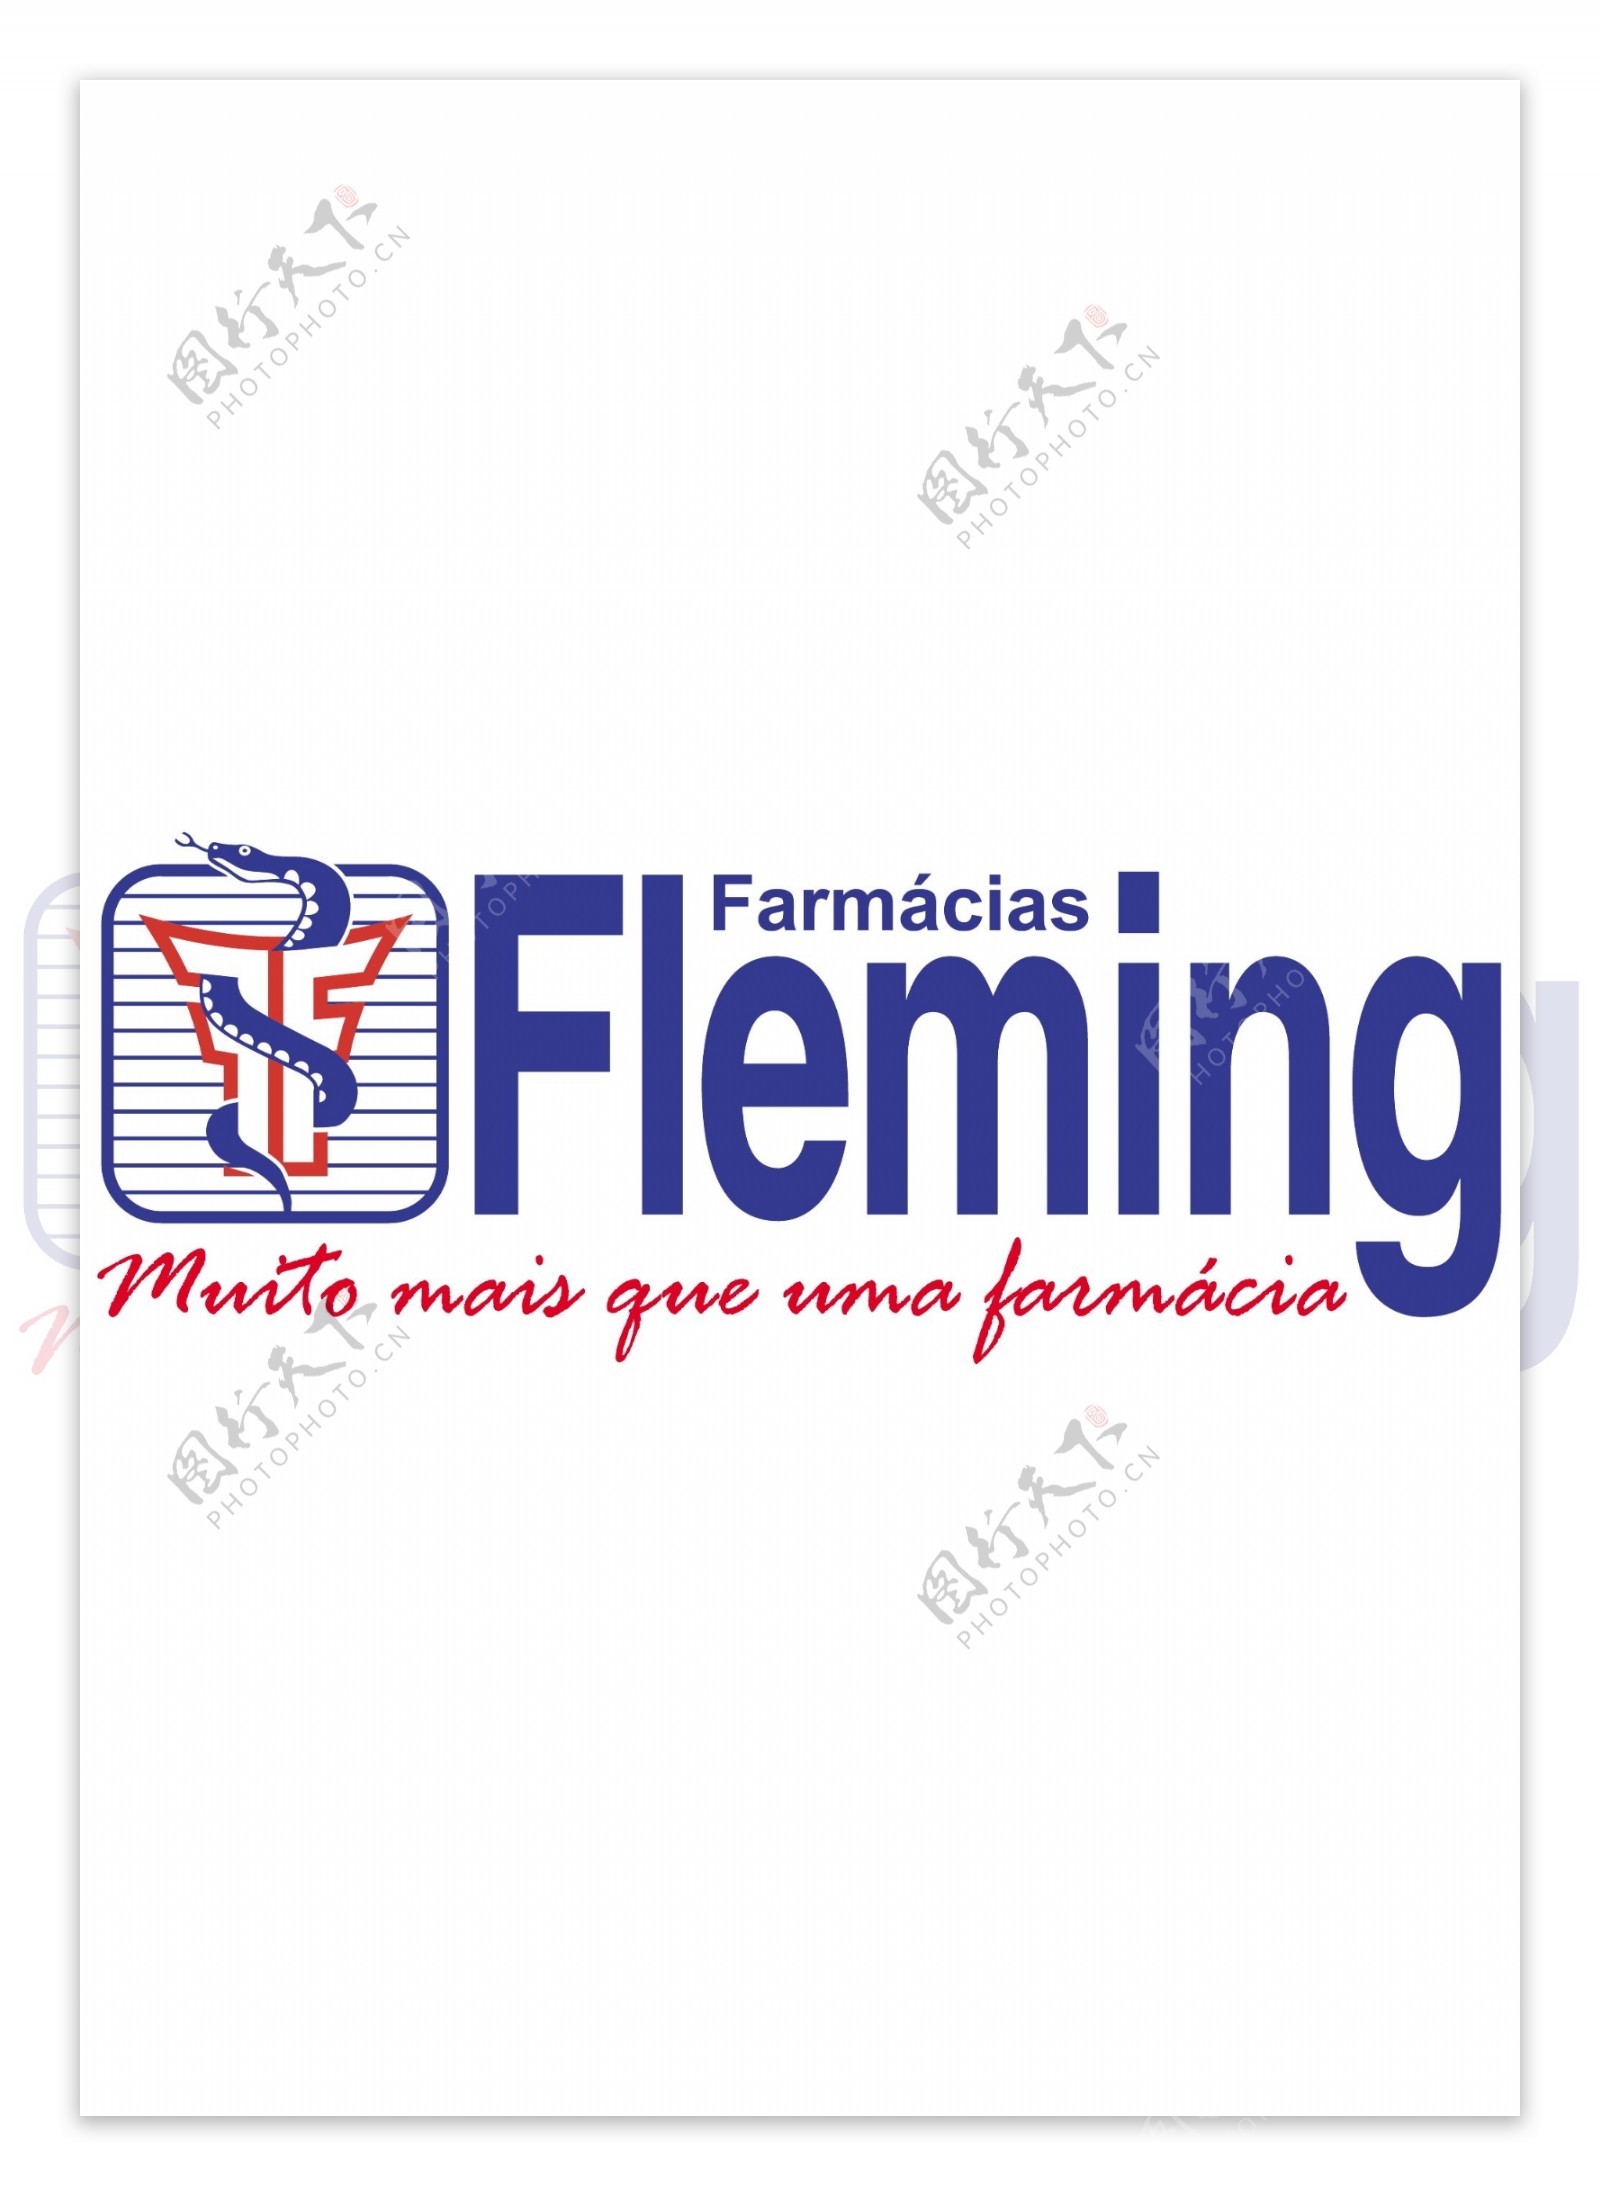 FarmaciasFleminglogo设计欣赏FarmaciasFleming医疗机构标志下载标志设计欣赏